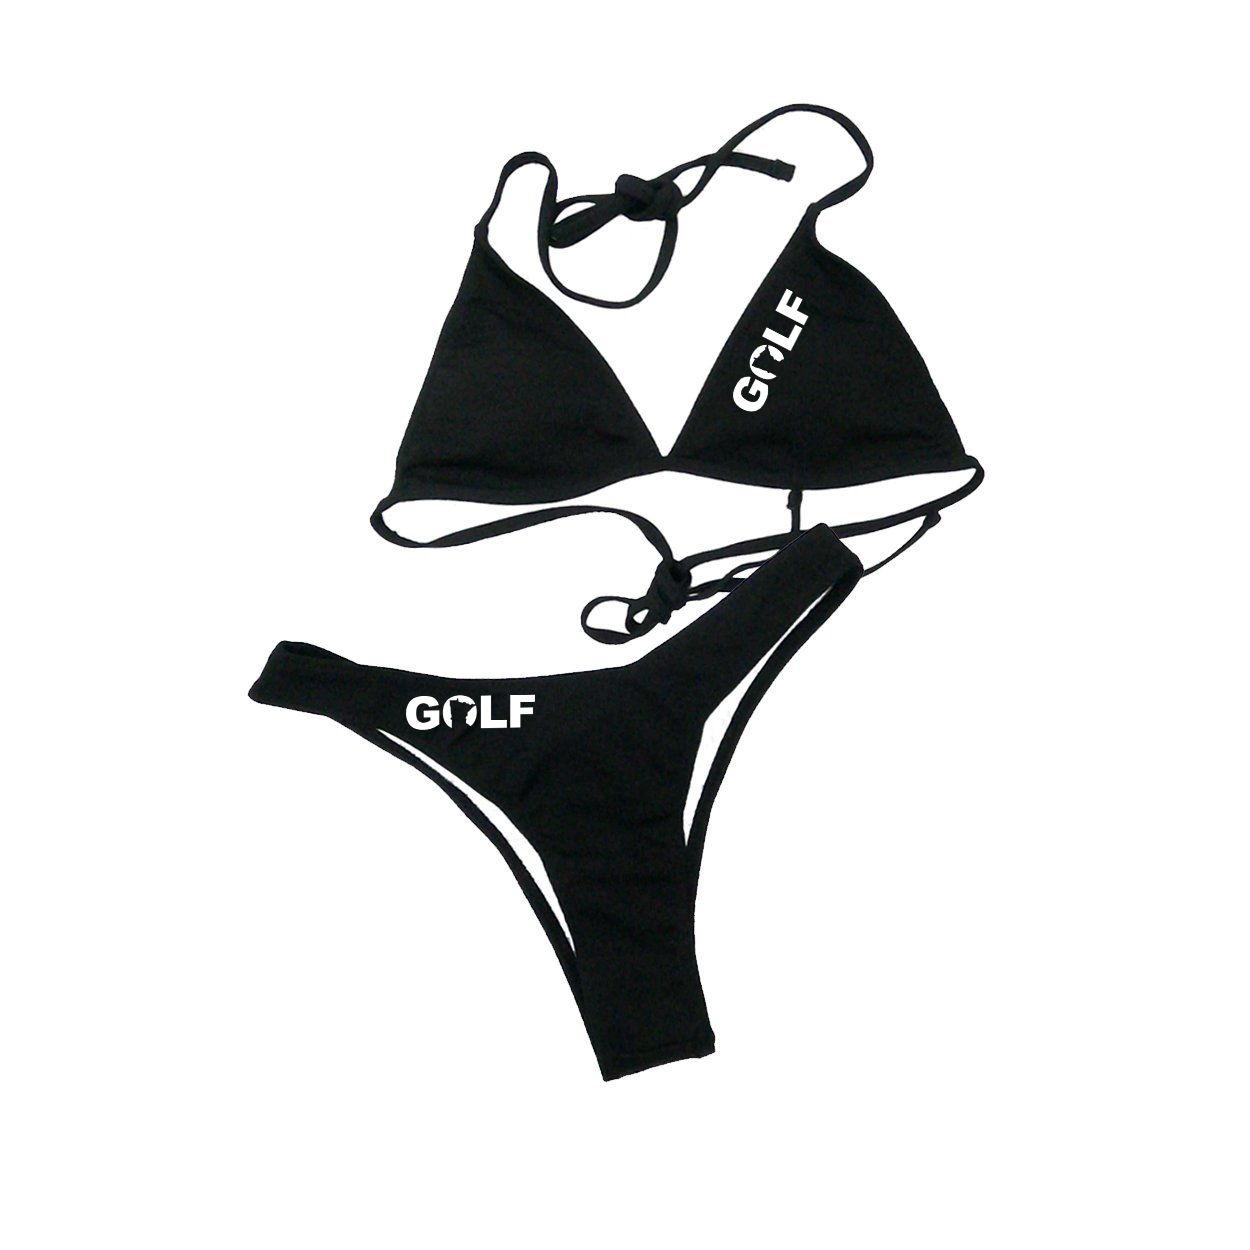 Golf Minnesota Classic Womens Padded Halter Triangle Two-Piece Swimsuit Basics Bikini Black (White Logo)